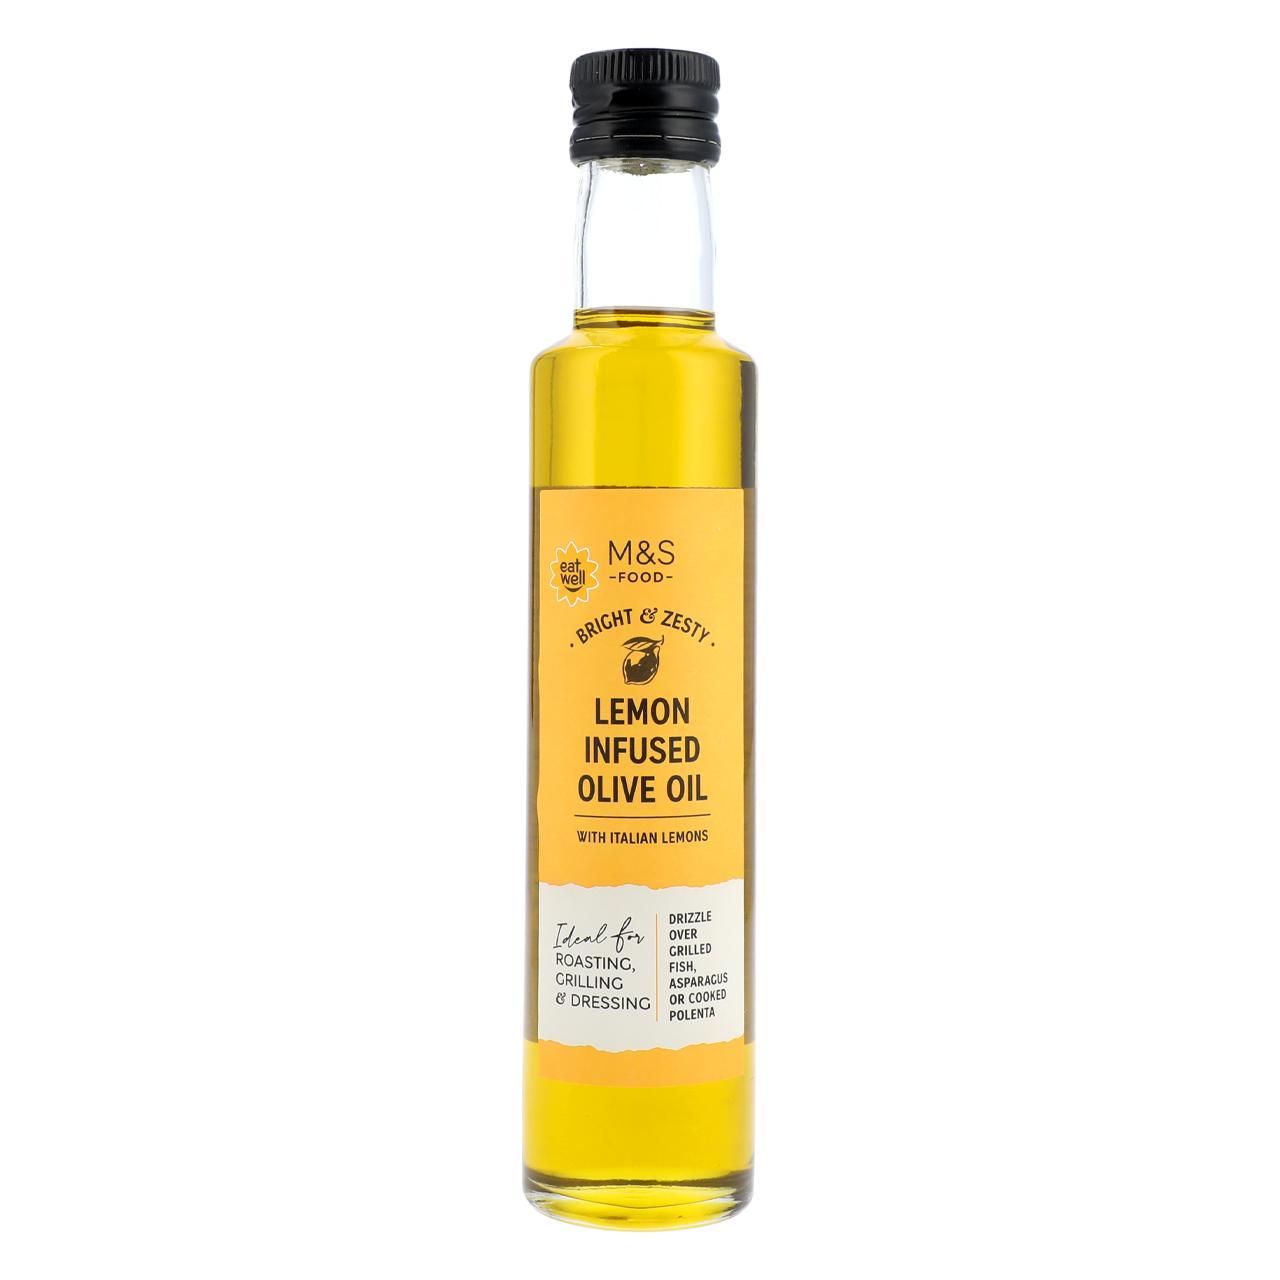 M&S Lemon Infused Olive Oil